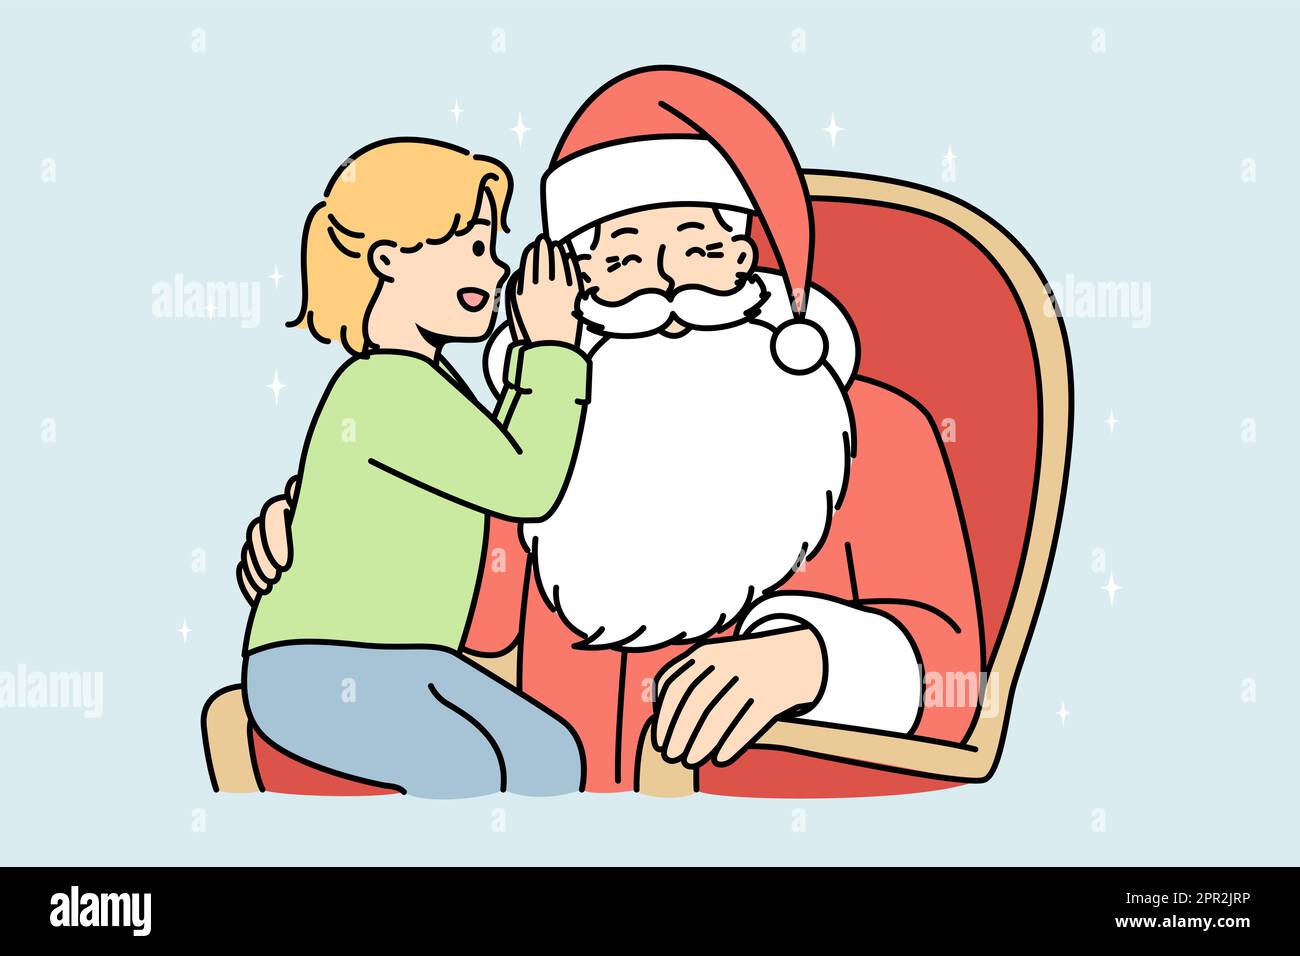 Child whispering in Santa Claus ear Stock Vector